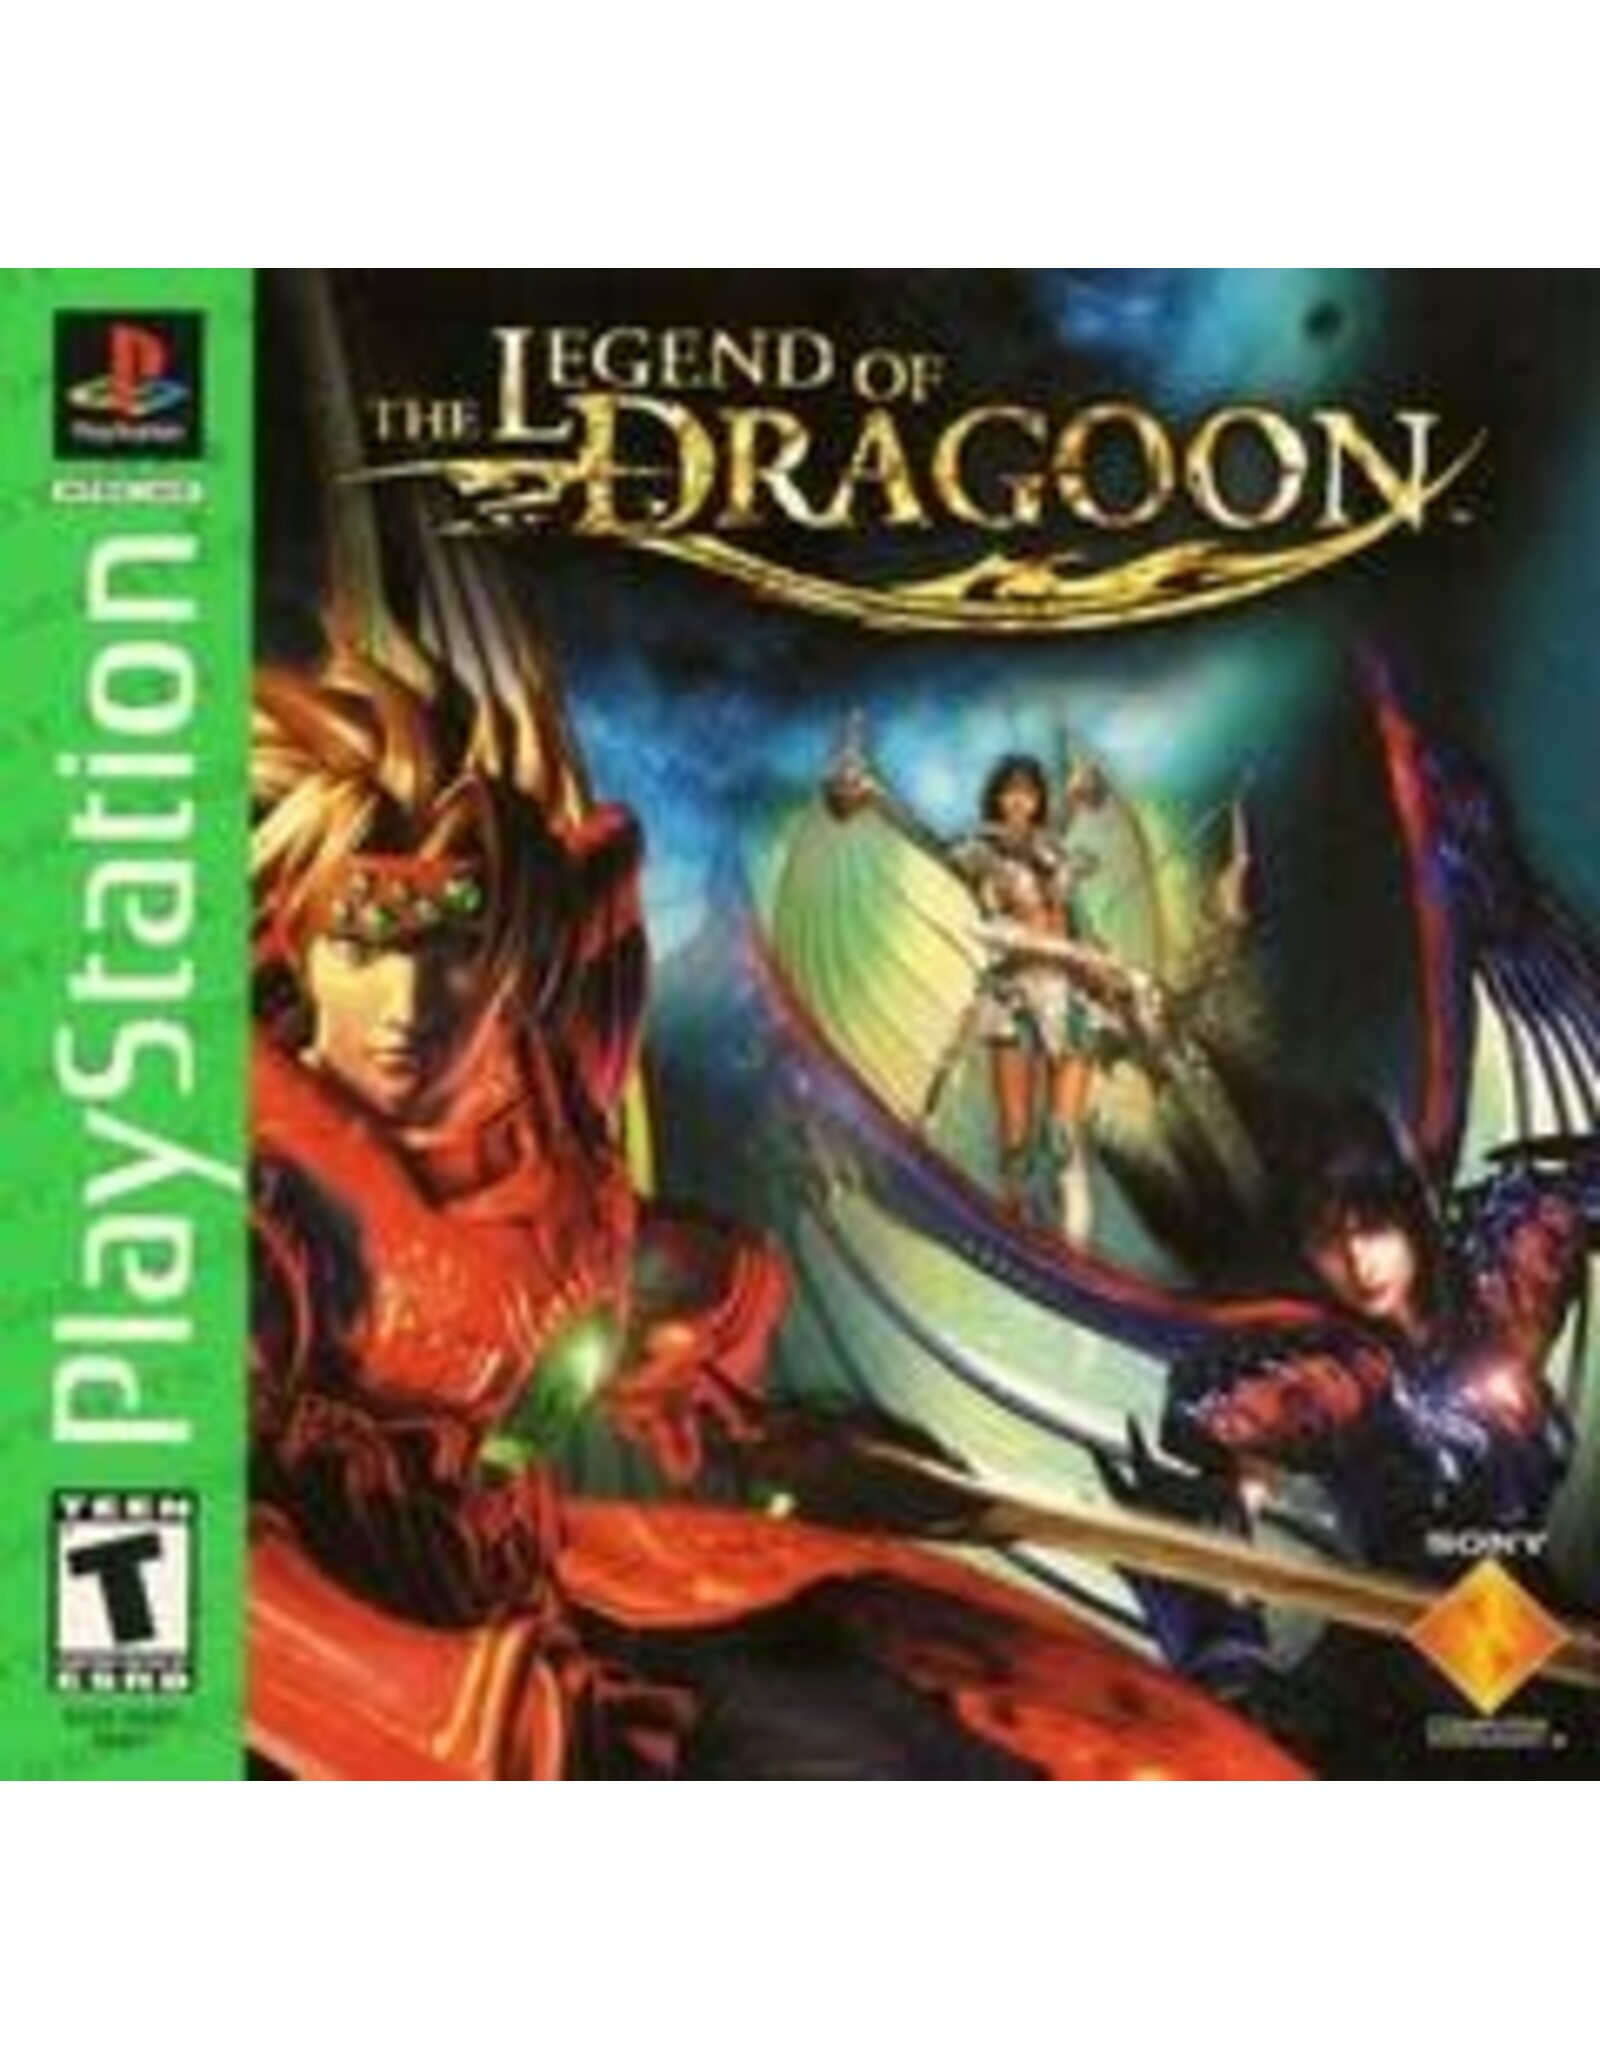 Playstation Legend of Dragoon (Greatest Hits, No Manual)